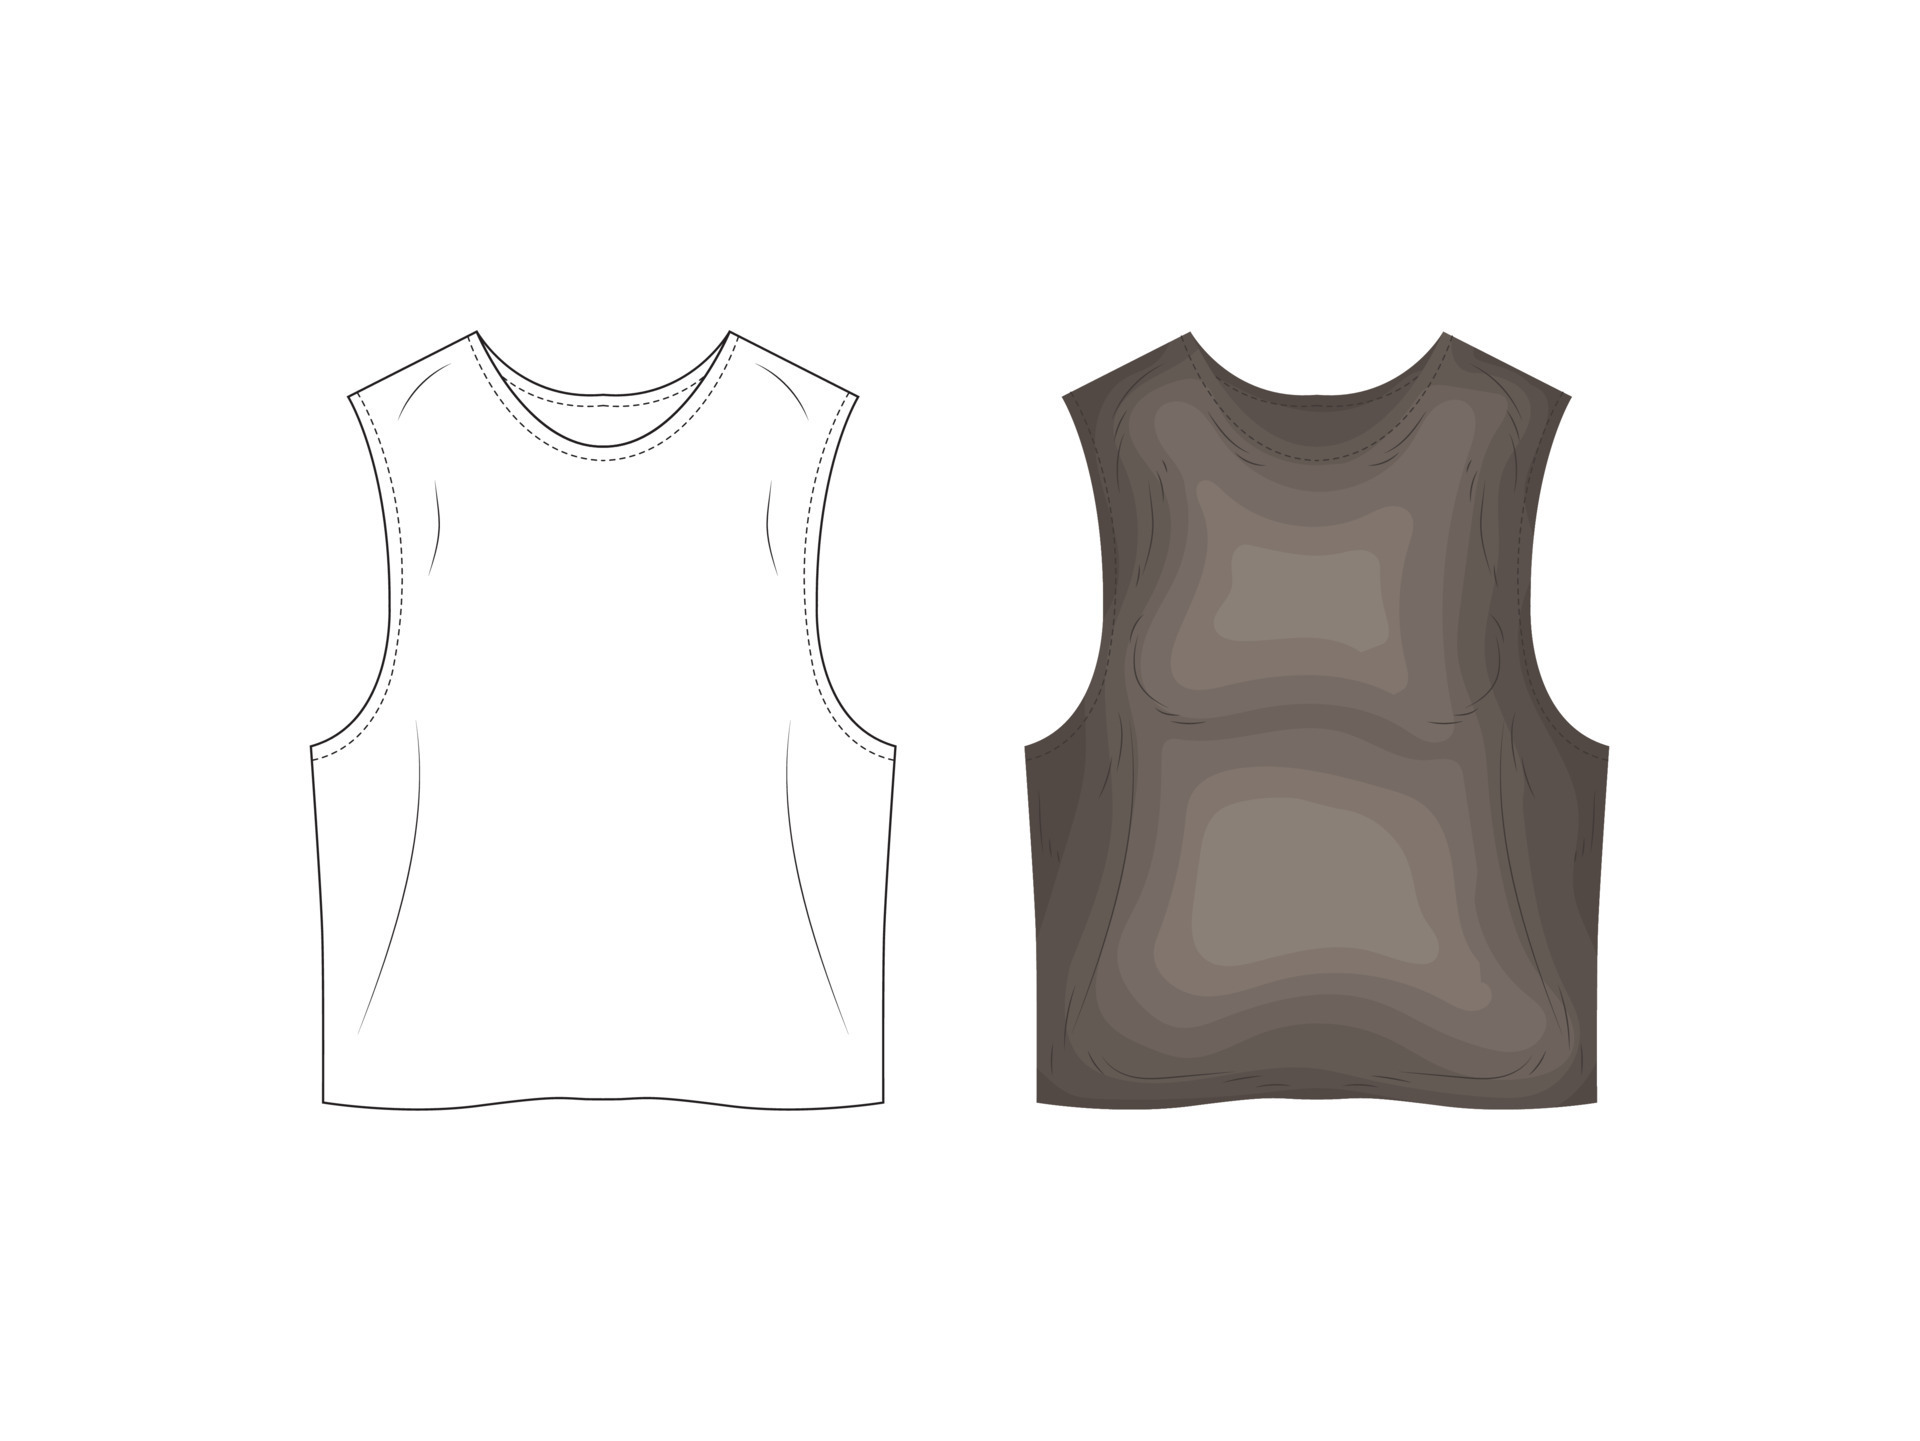 fashion product catalog uniforms mockup sketch vector illustration ...